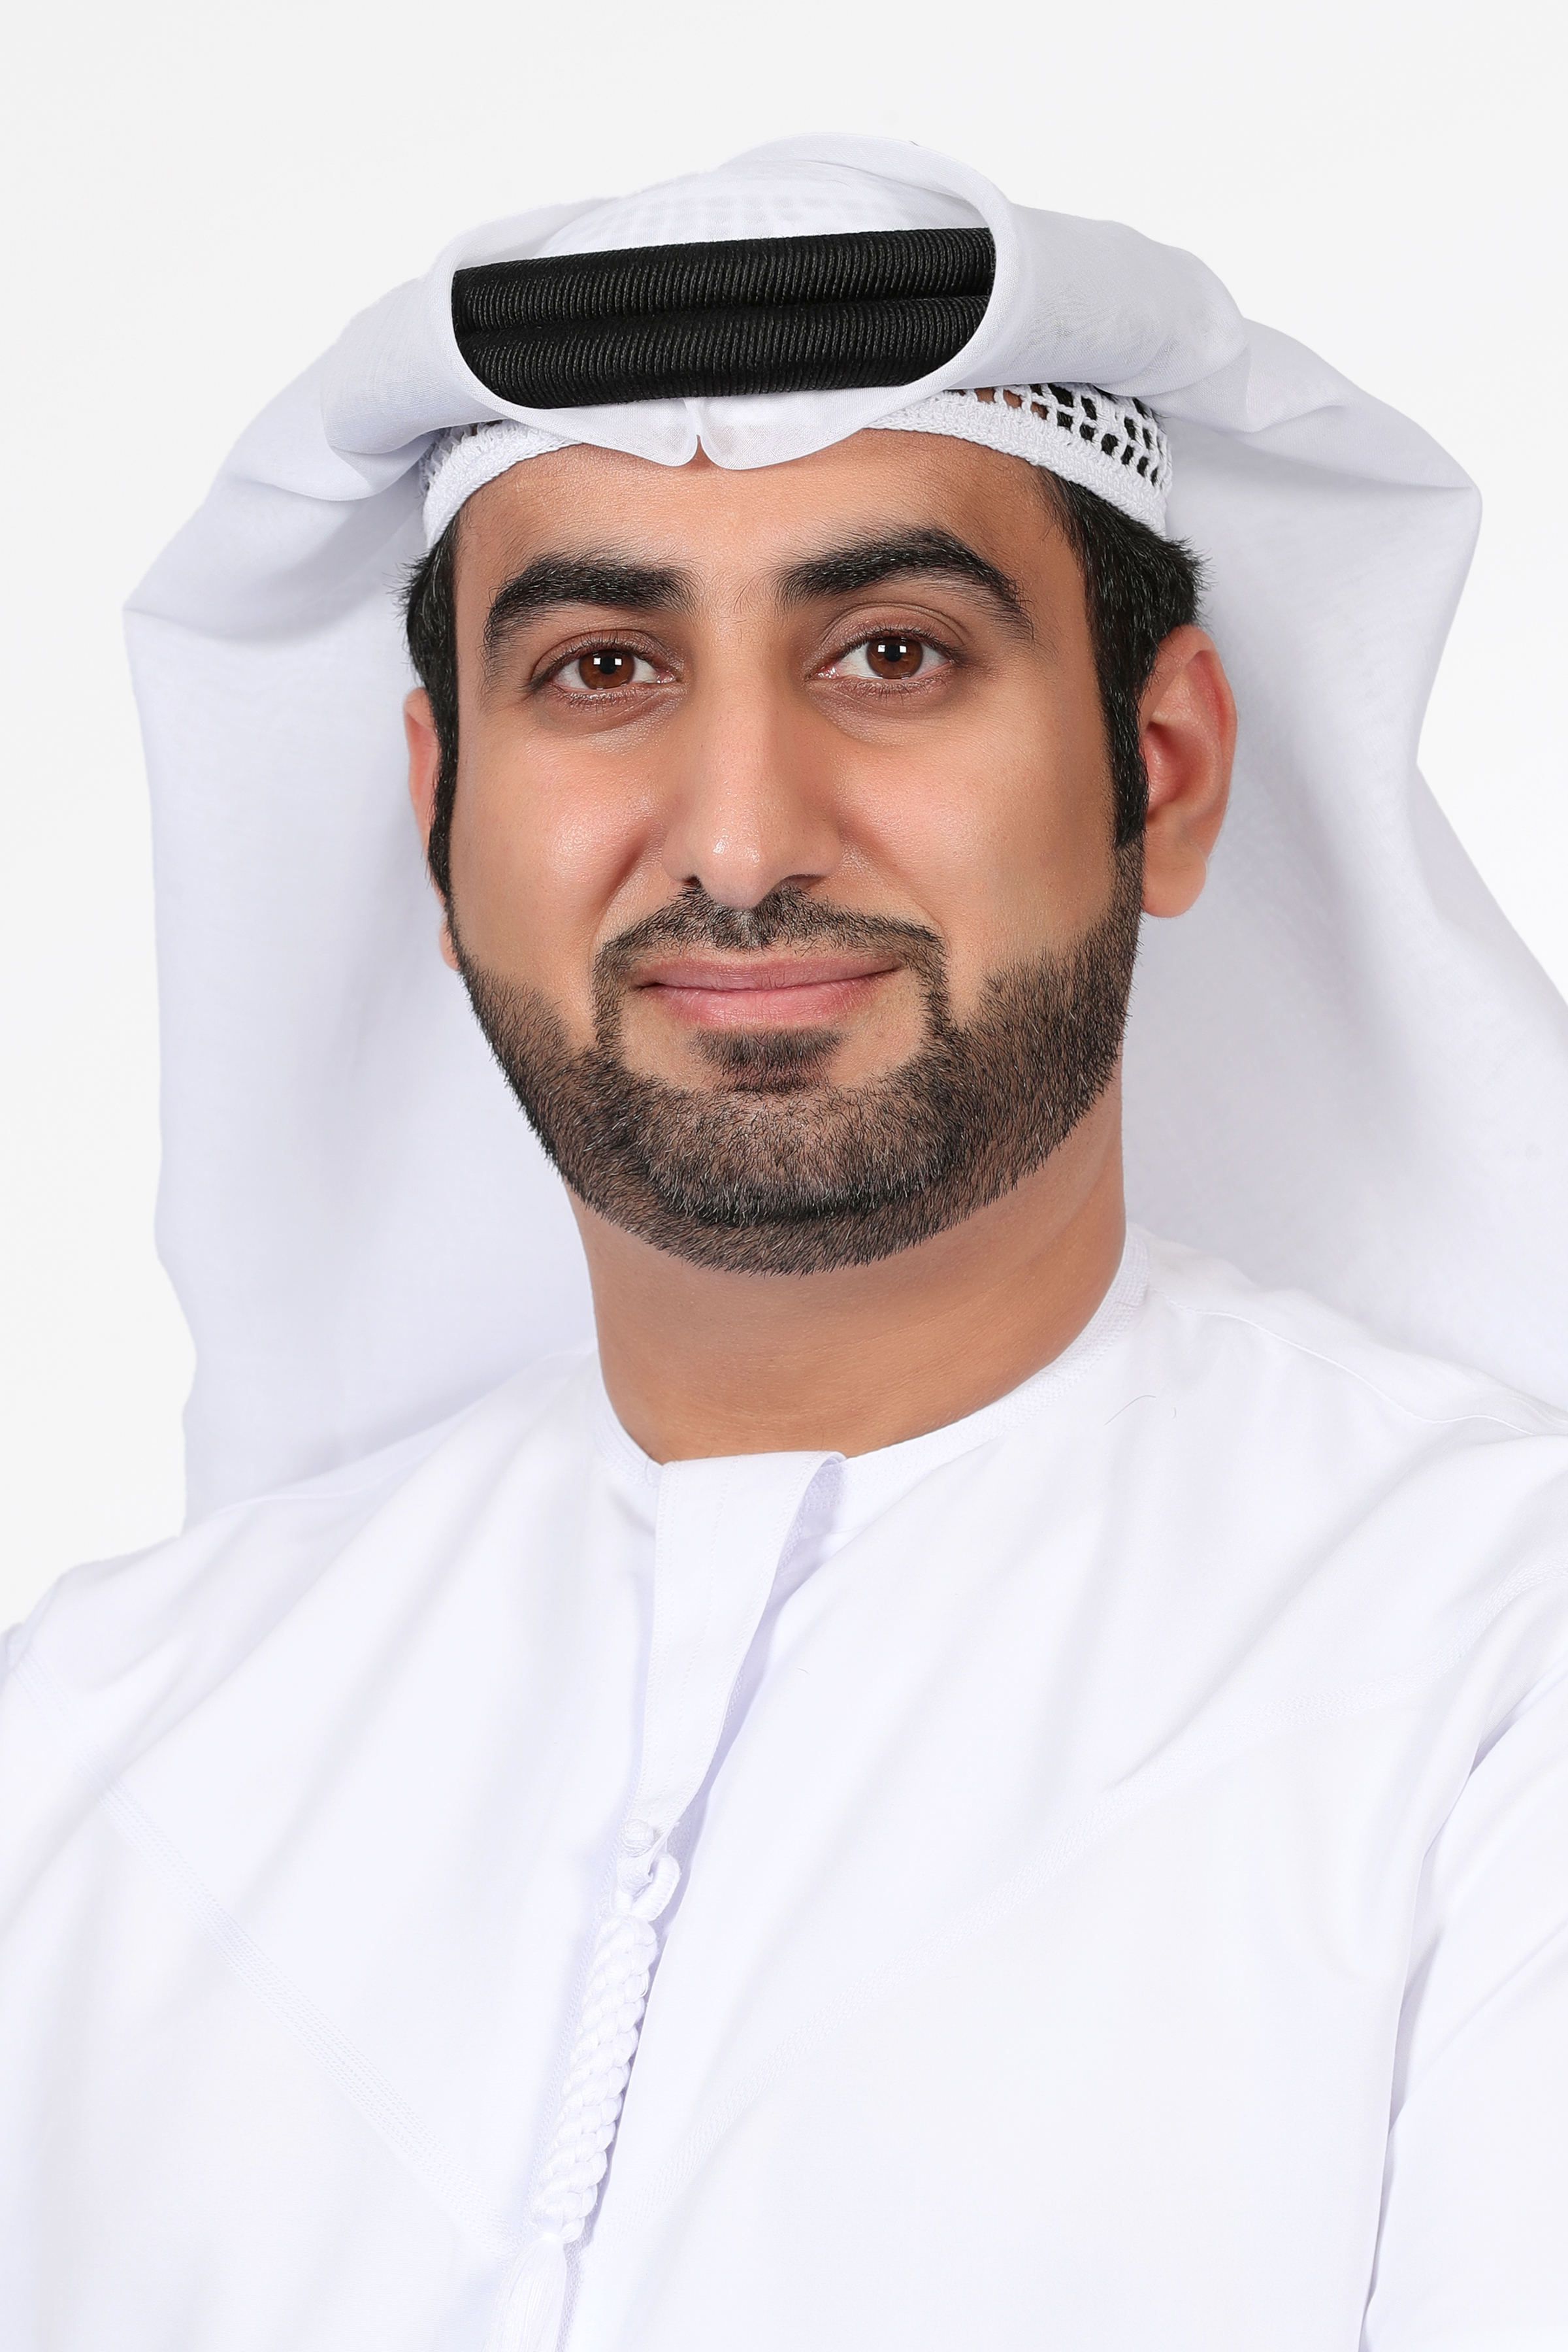 Dr. Ahmed Alkaabi